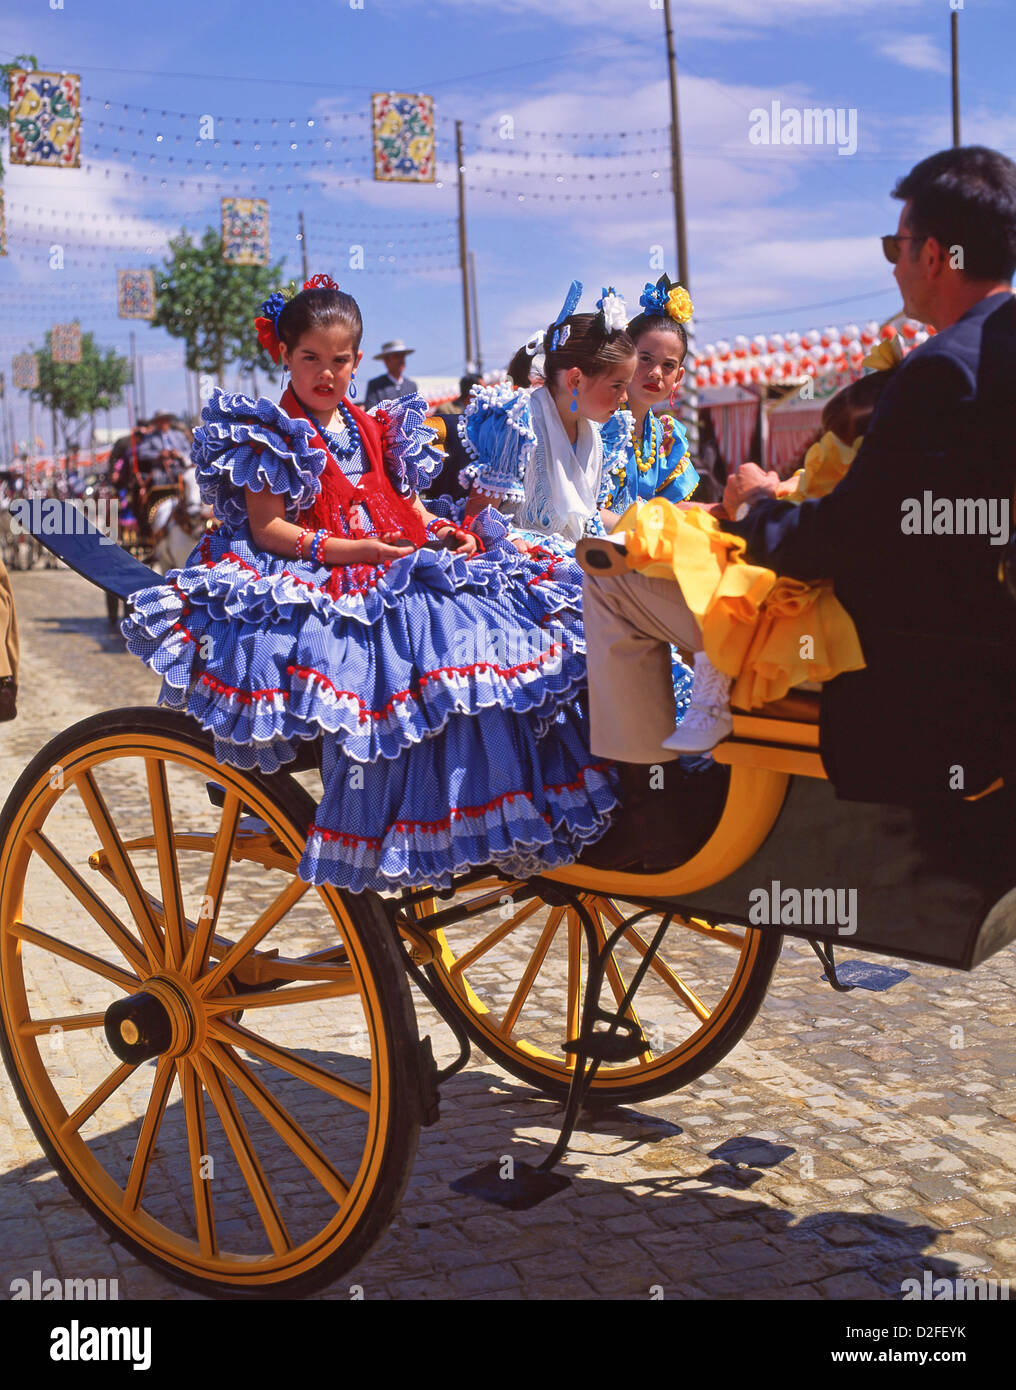 Girls in flamenco dress on carriage, Feria de abril de Sevilla (Seville April Fair), Seville, Sevilla Province, Andalucia, Spain Stock Photo